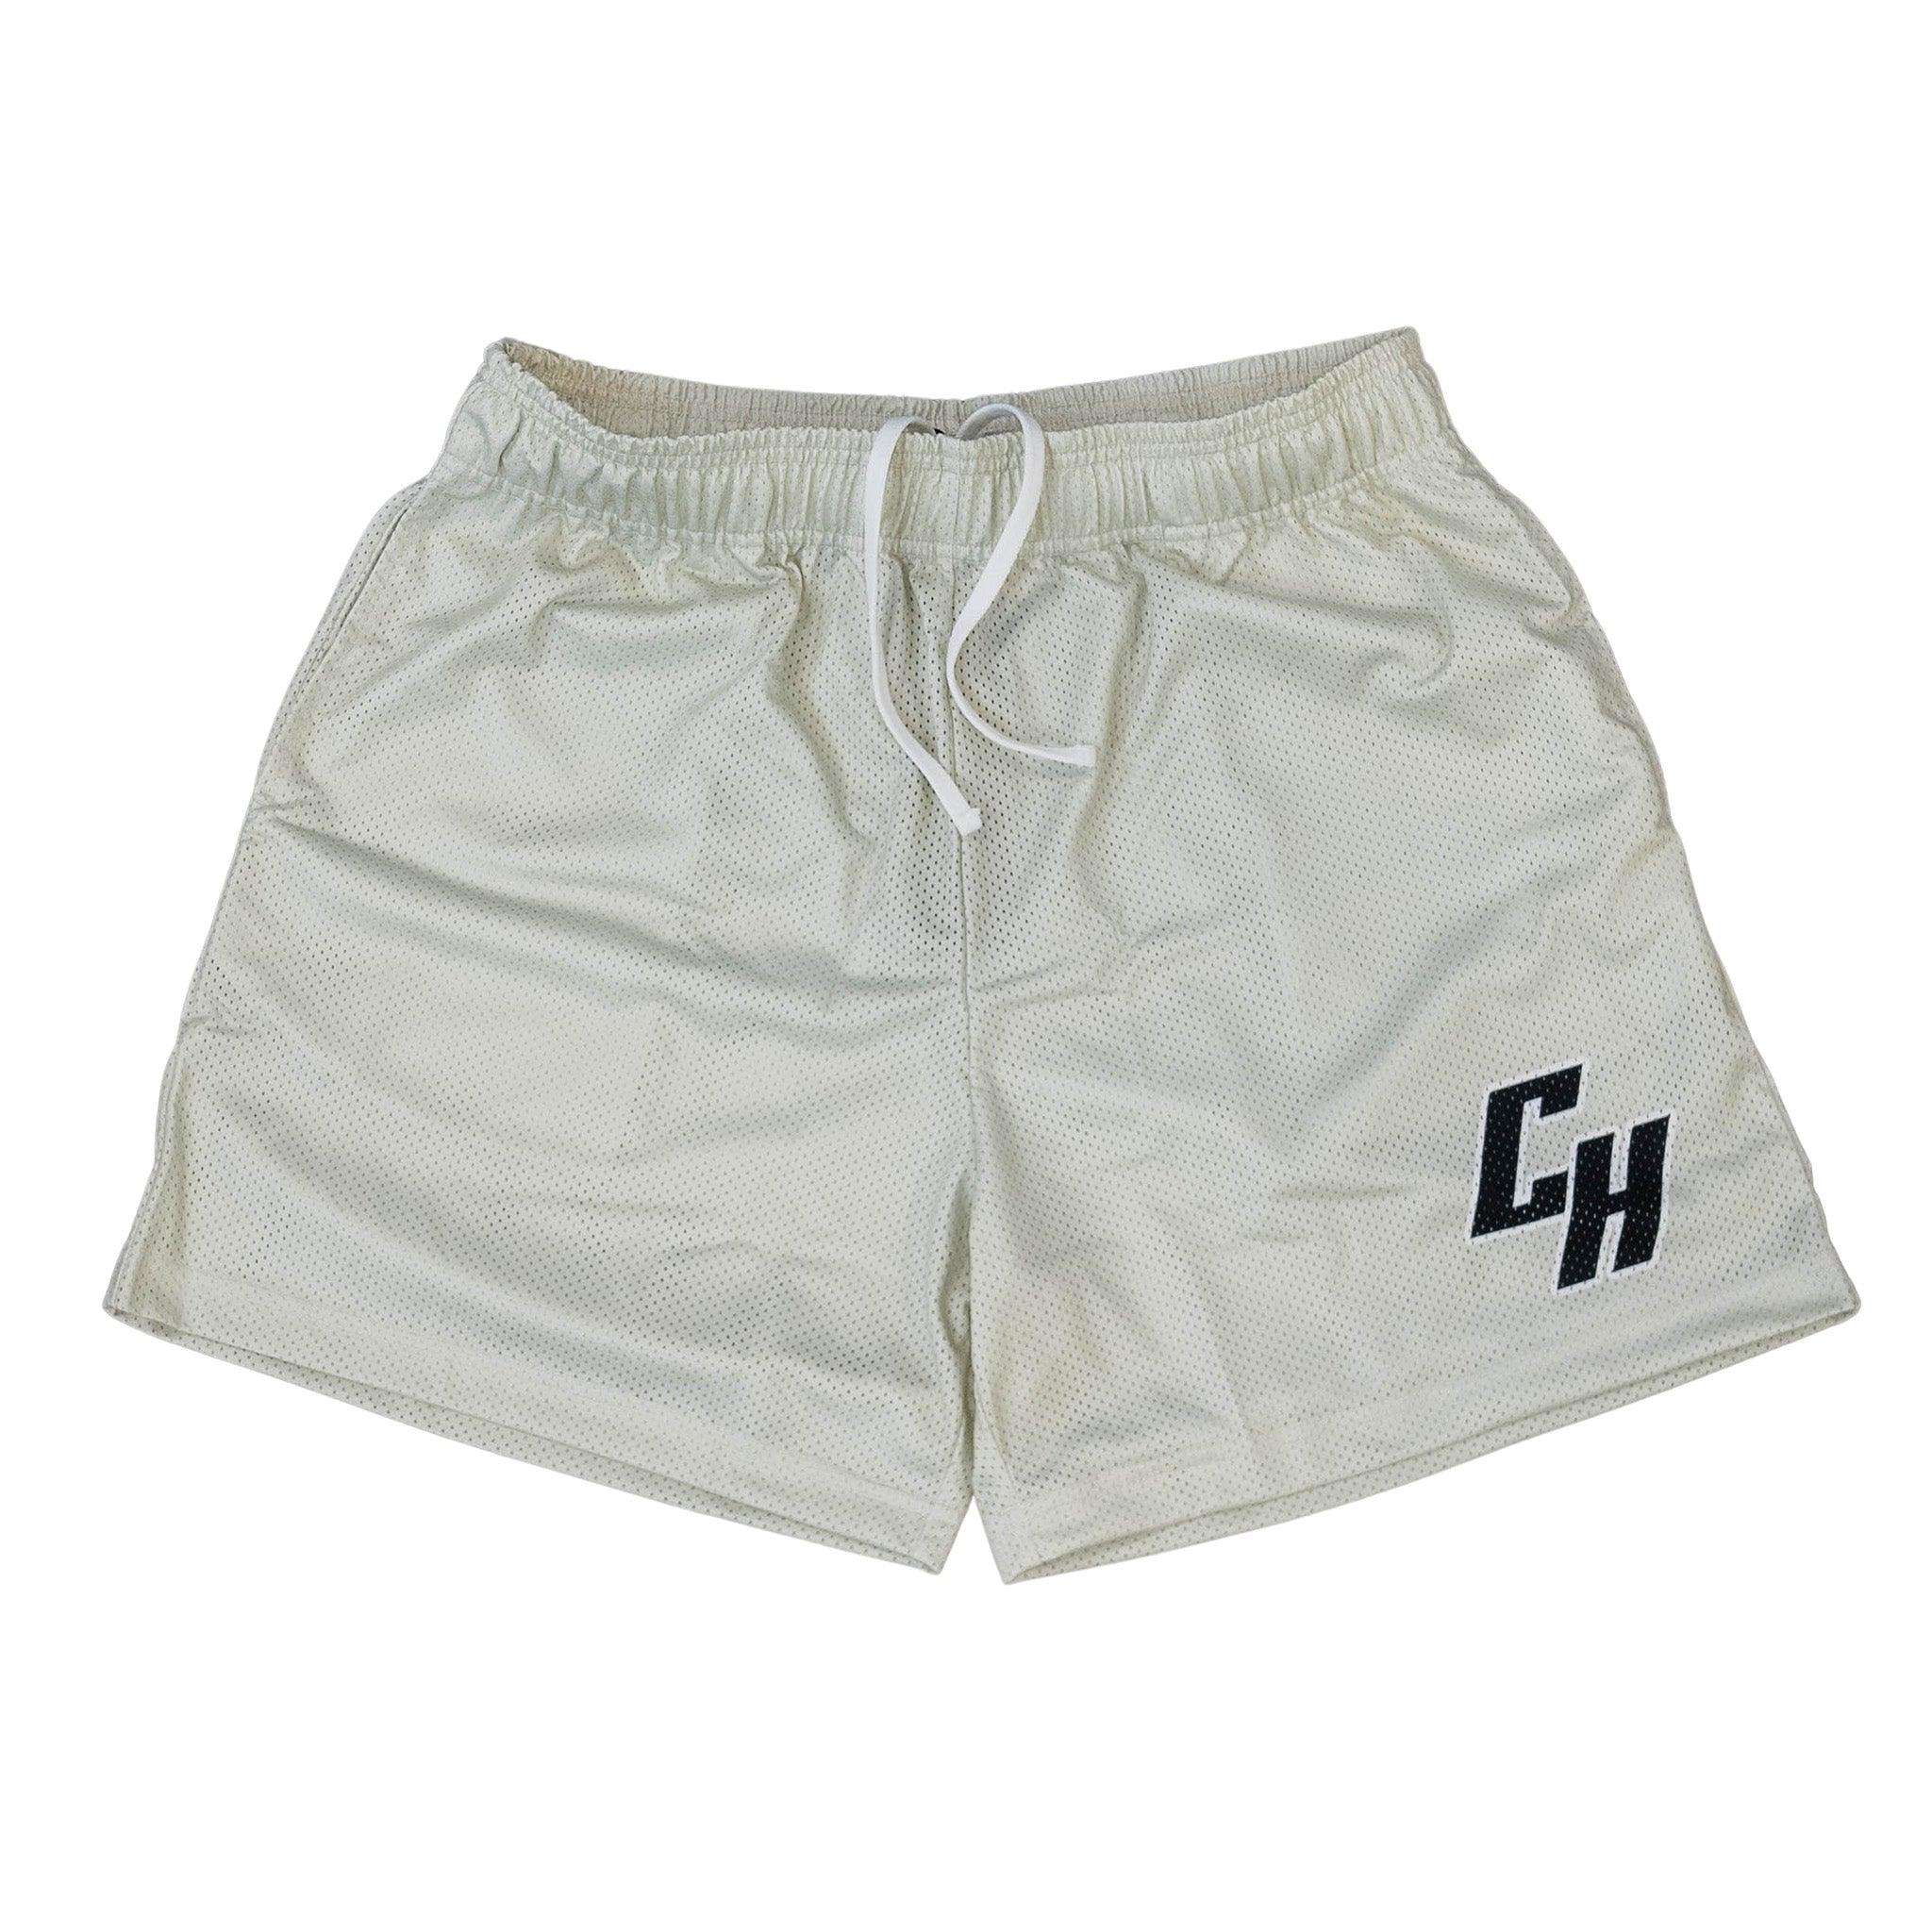 Common Hype Mint Shorts